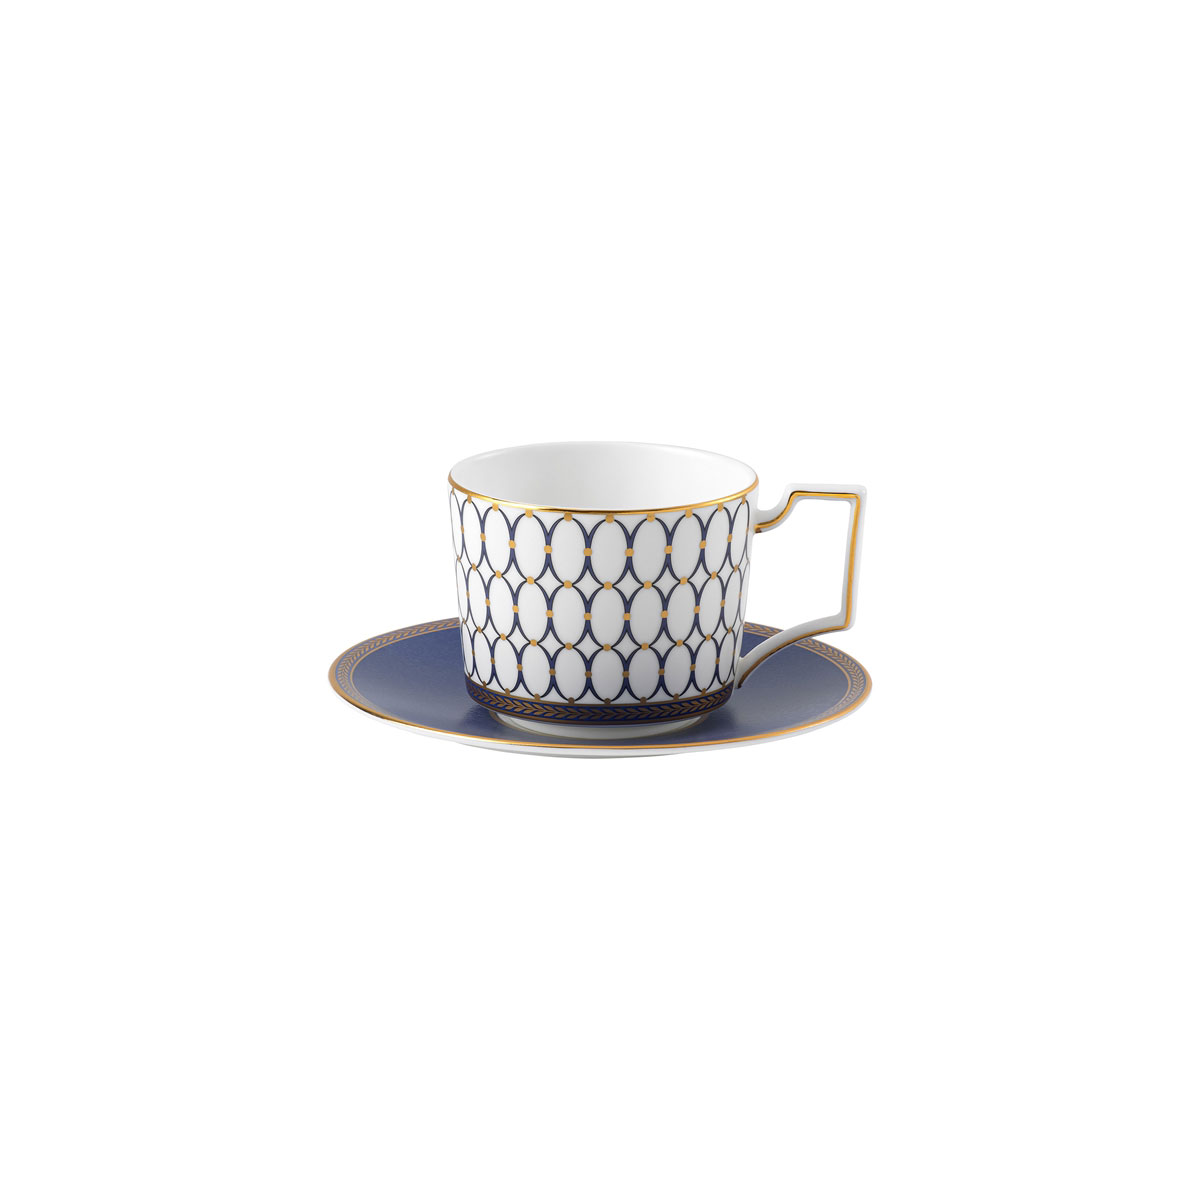 Wedgwood Renaissance Gold Teacup and Saucer Set